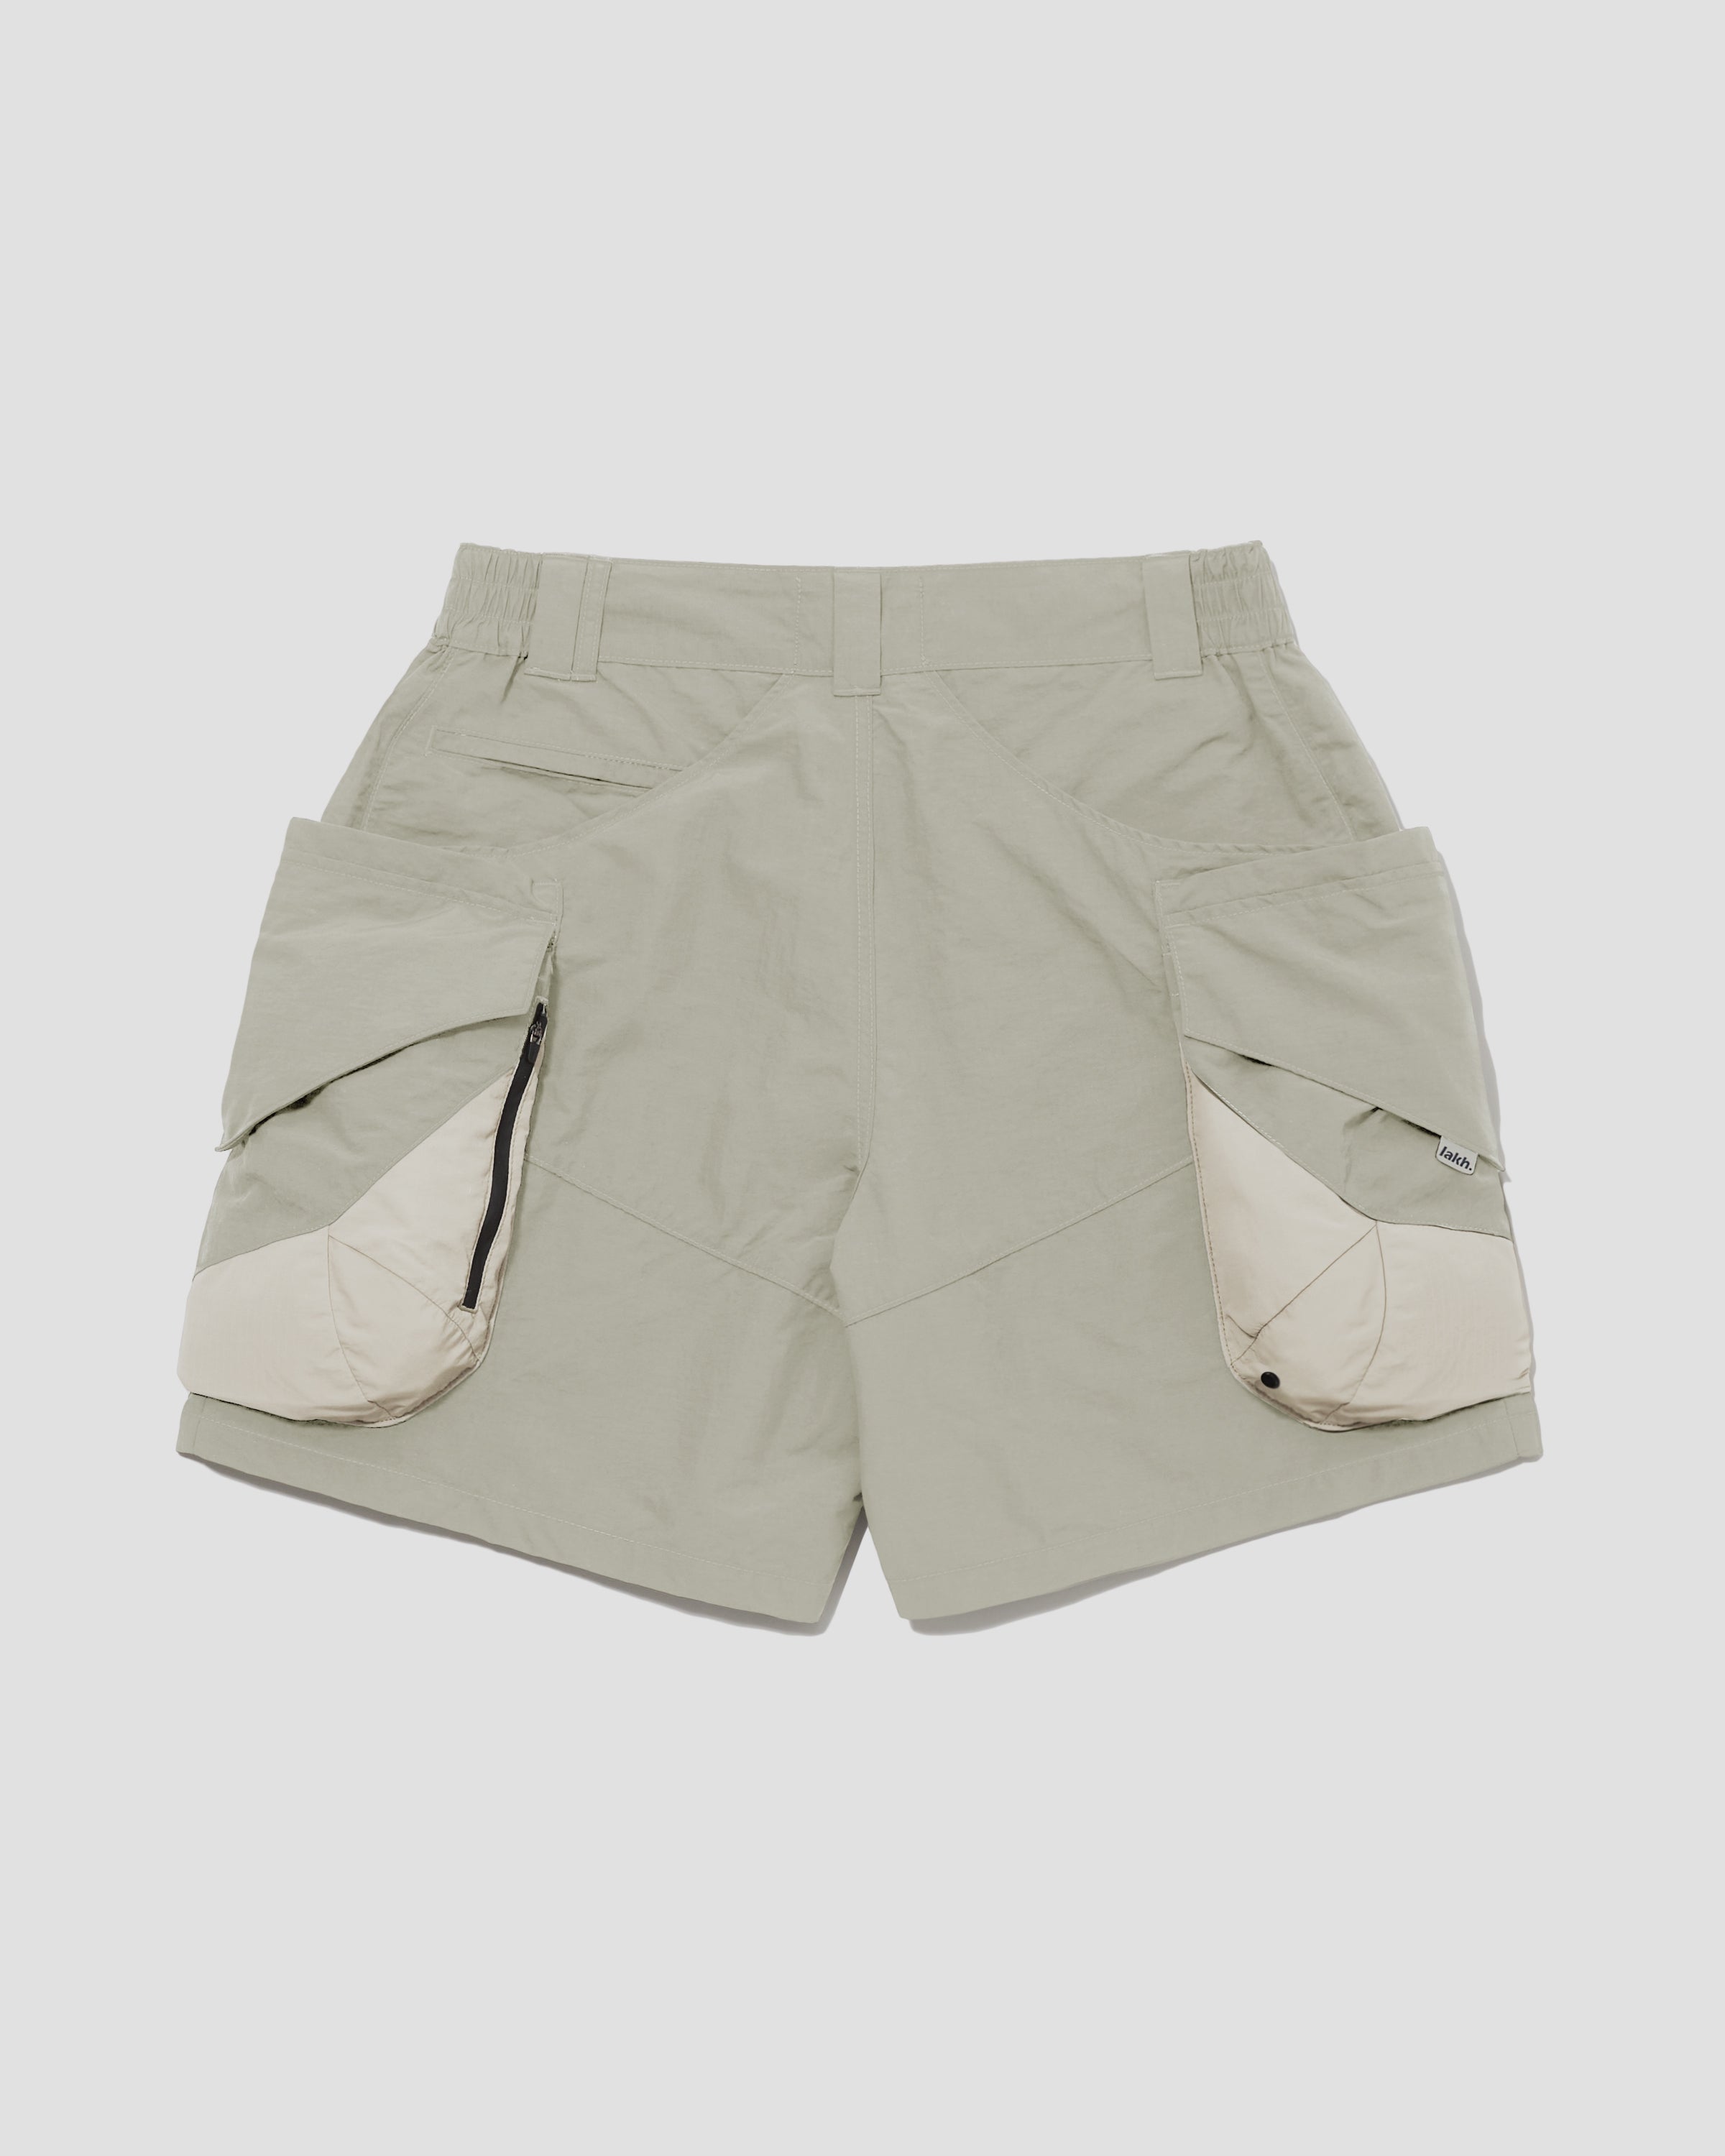 5 Panel Pockets Shorts - Sand